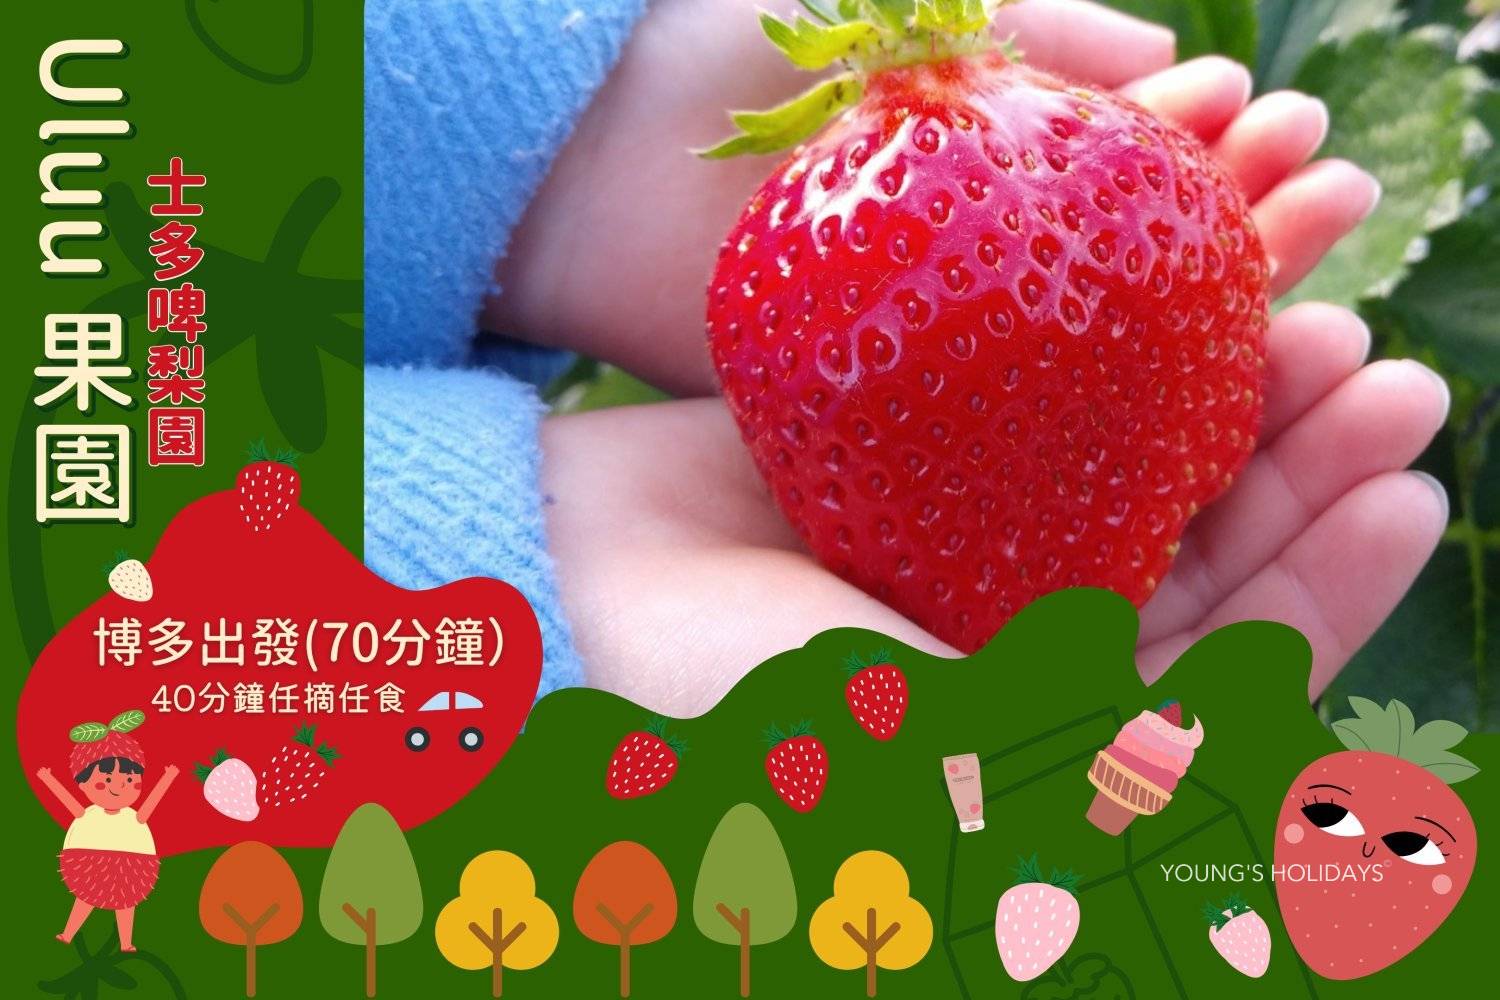 Young's Holidays 【甜王即摘任食】福岡ULUU果園40分鐘草莓任食體驗 1